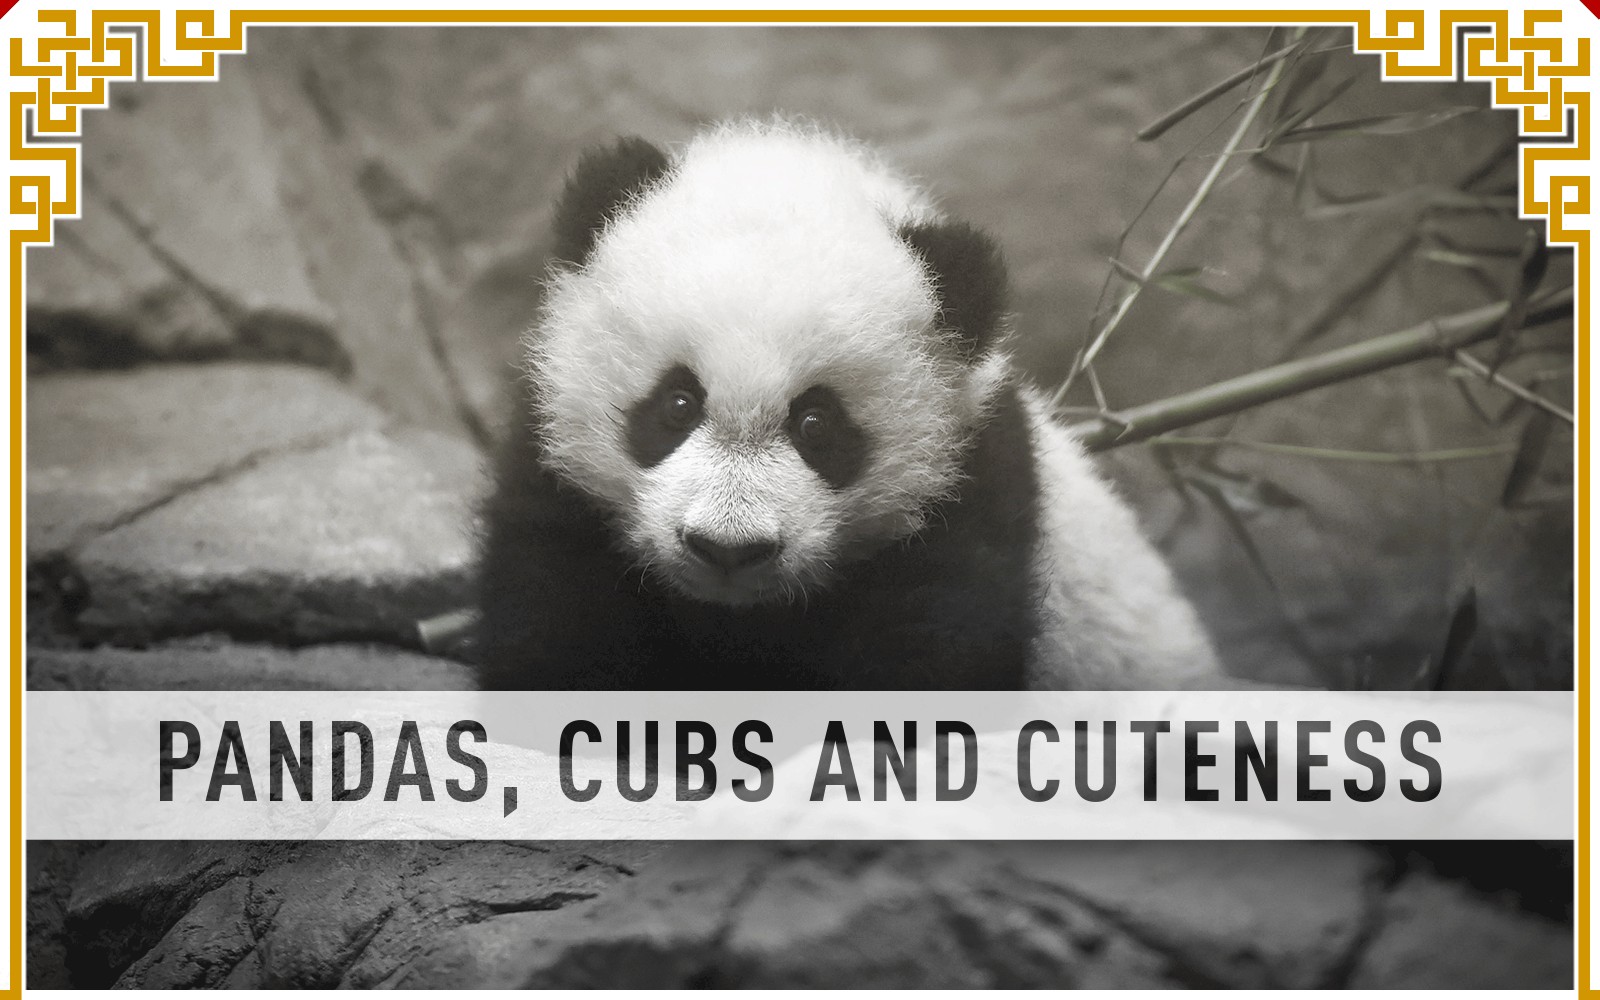  Pandas, cubs and cuteness 